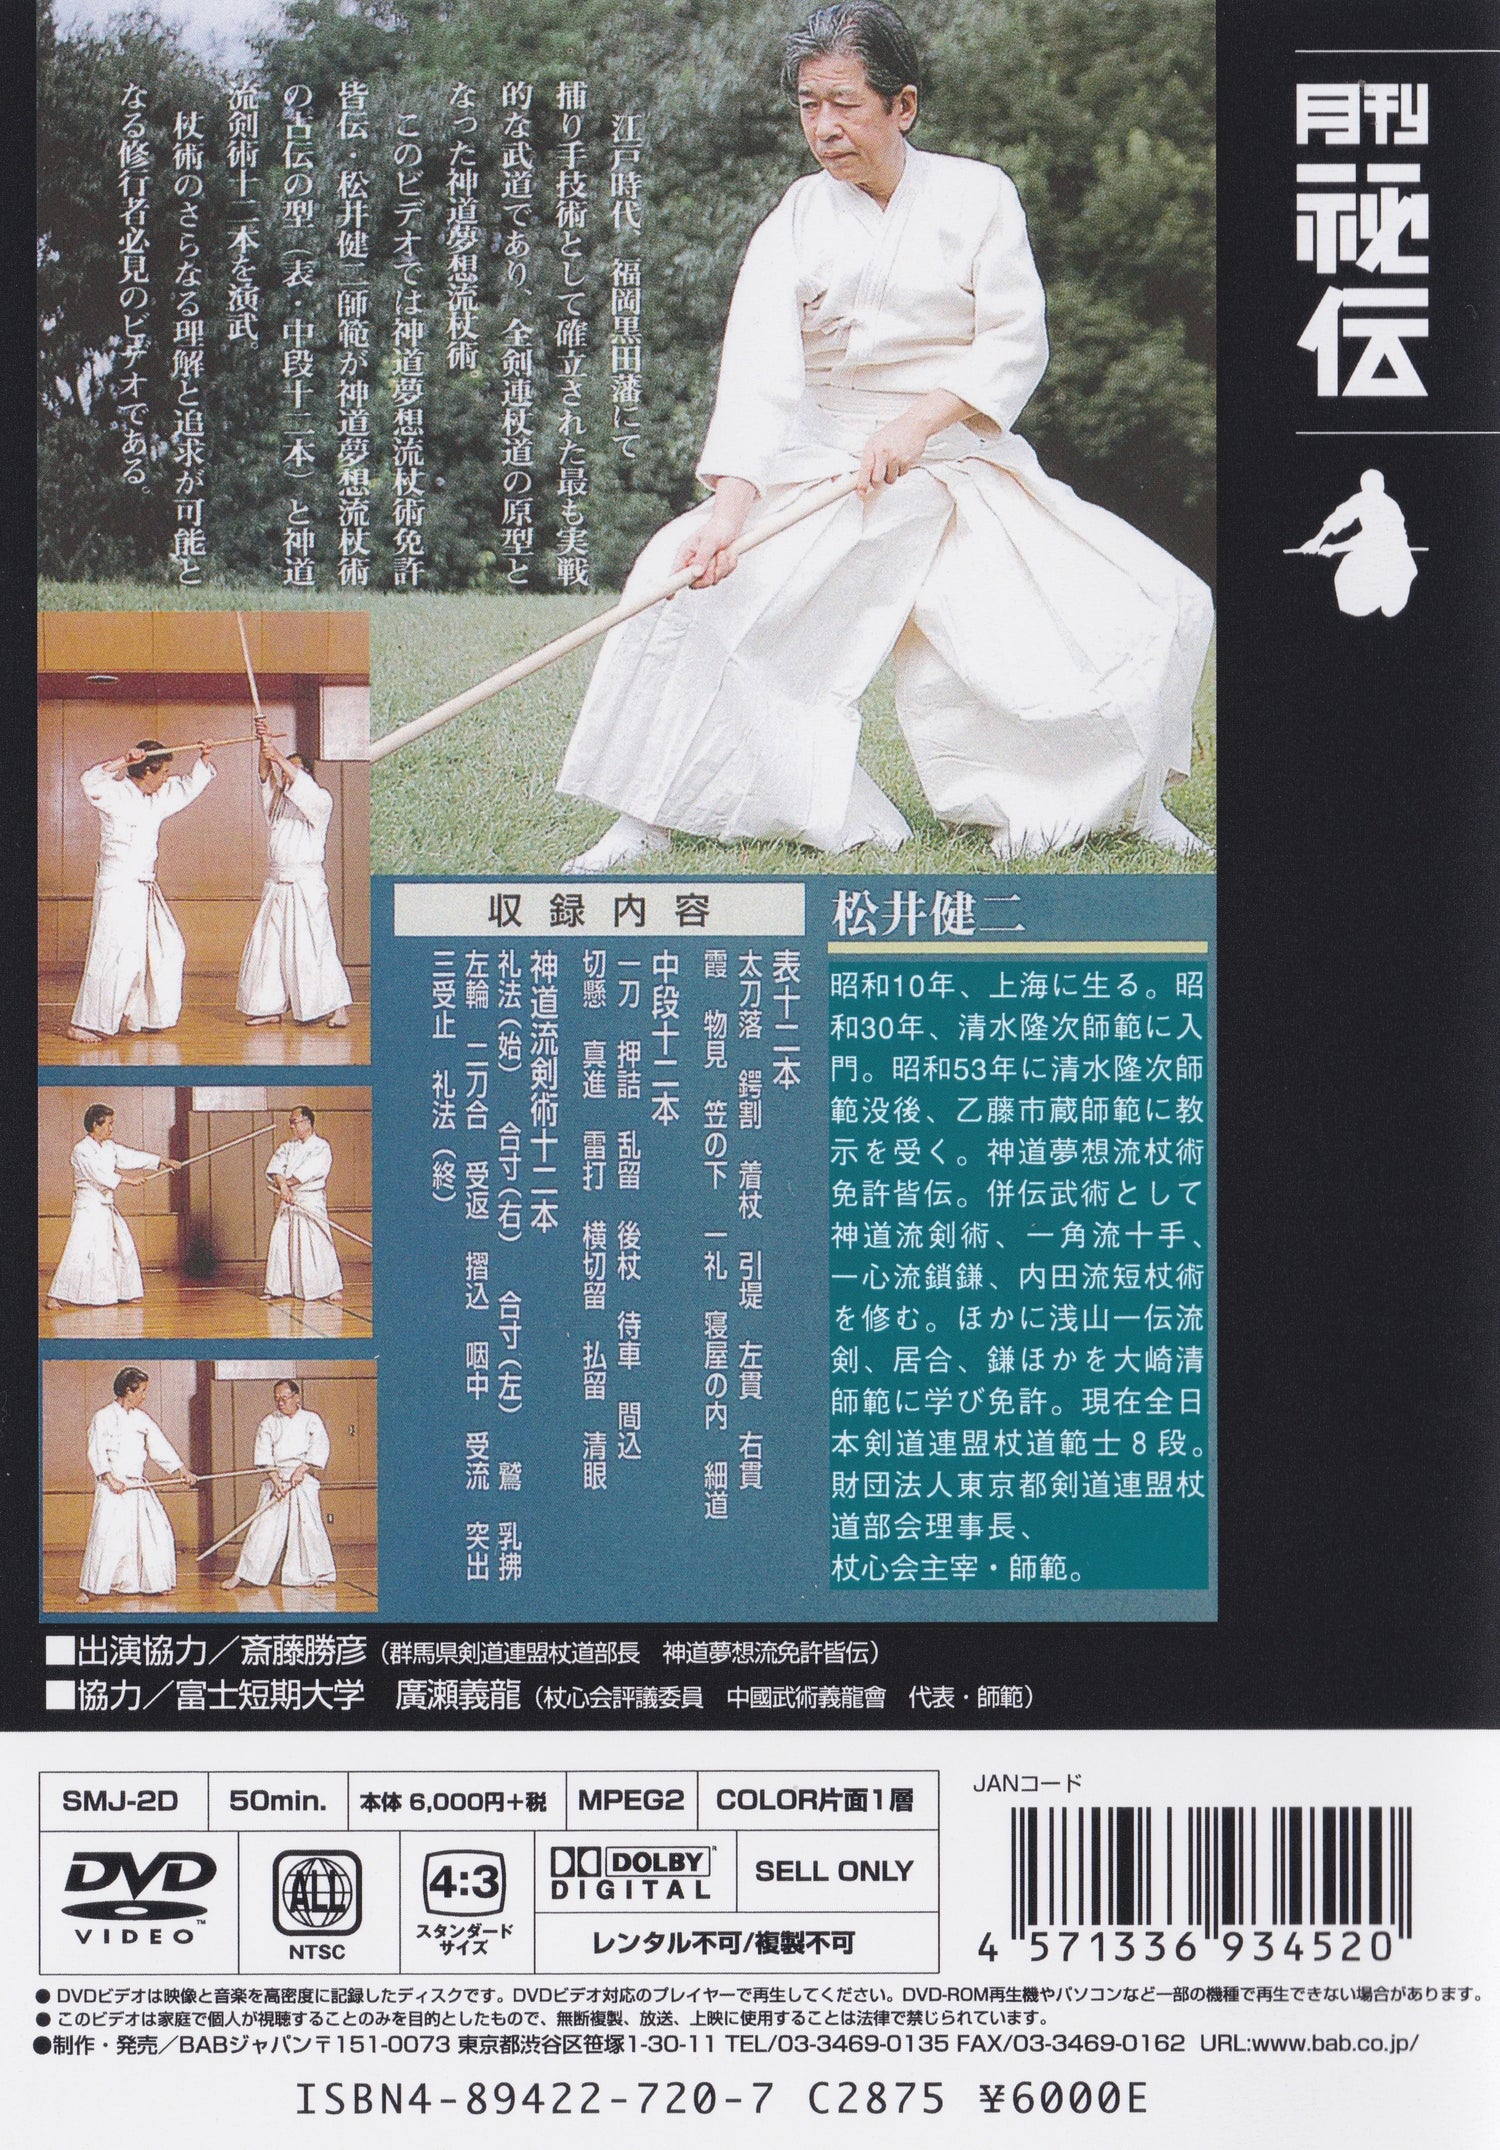 Shinto Muso Ryu: Technical Skills Vol 2 by Kenji Matsui DVD